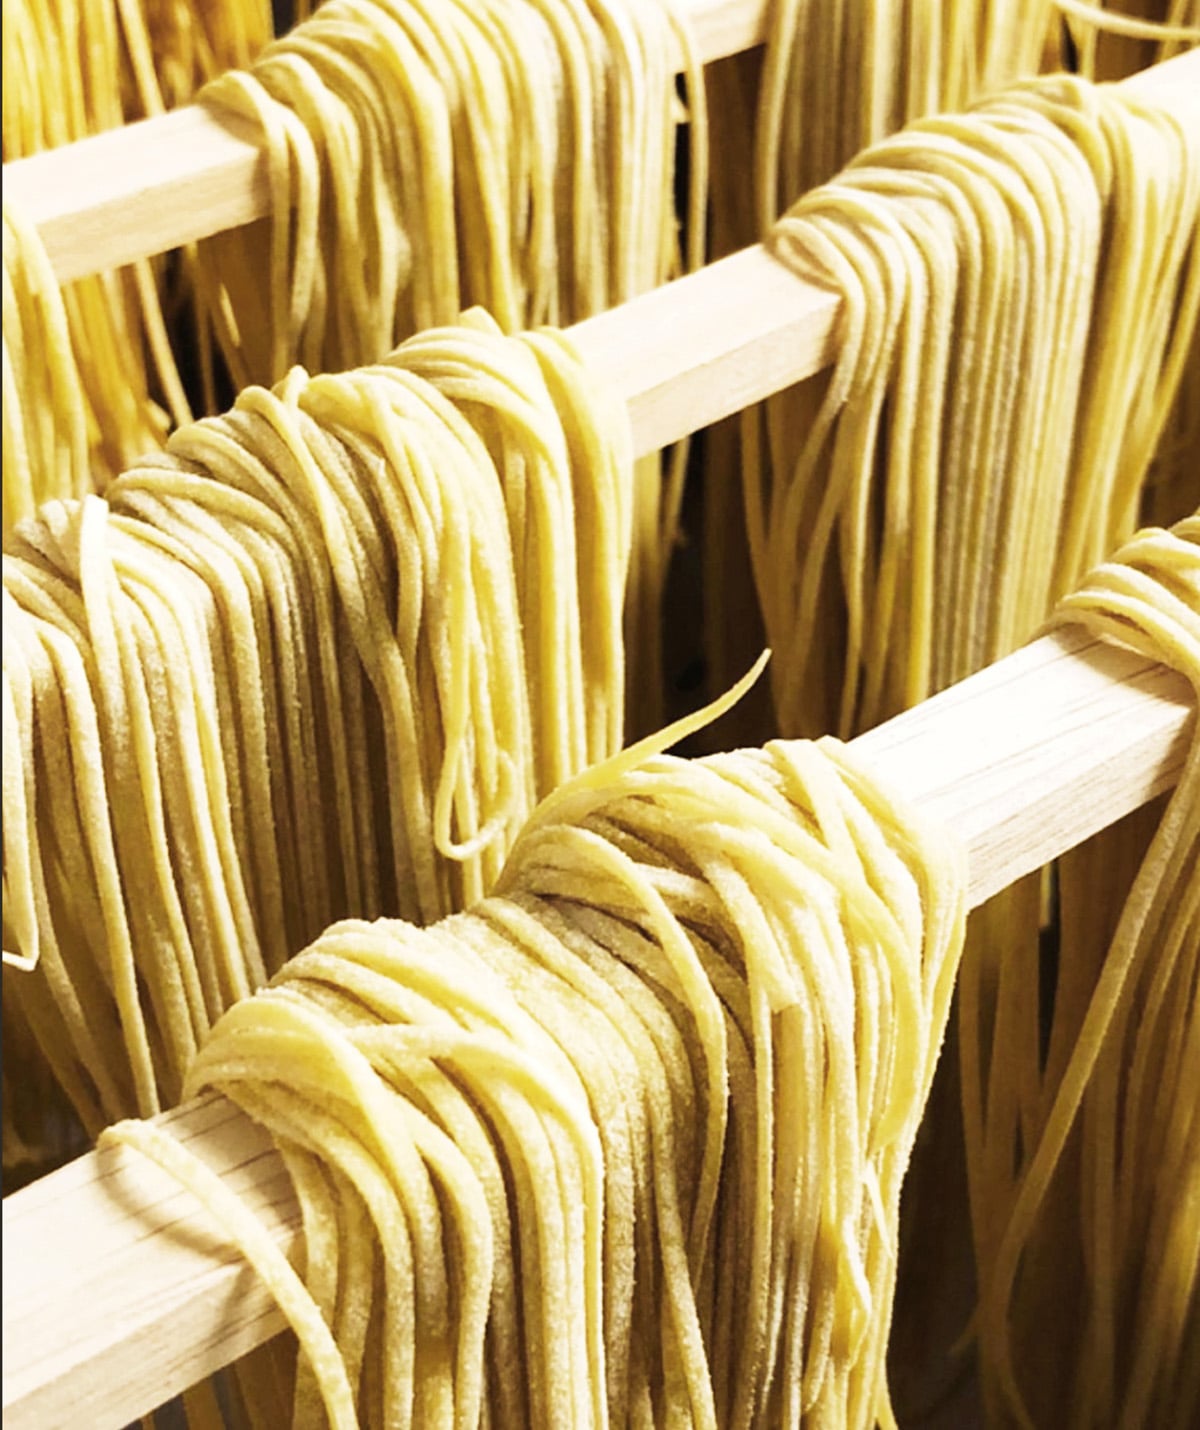 Pasta drying